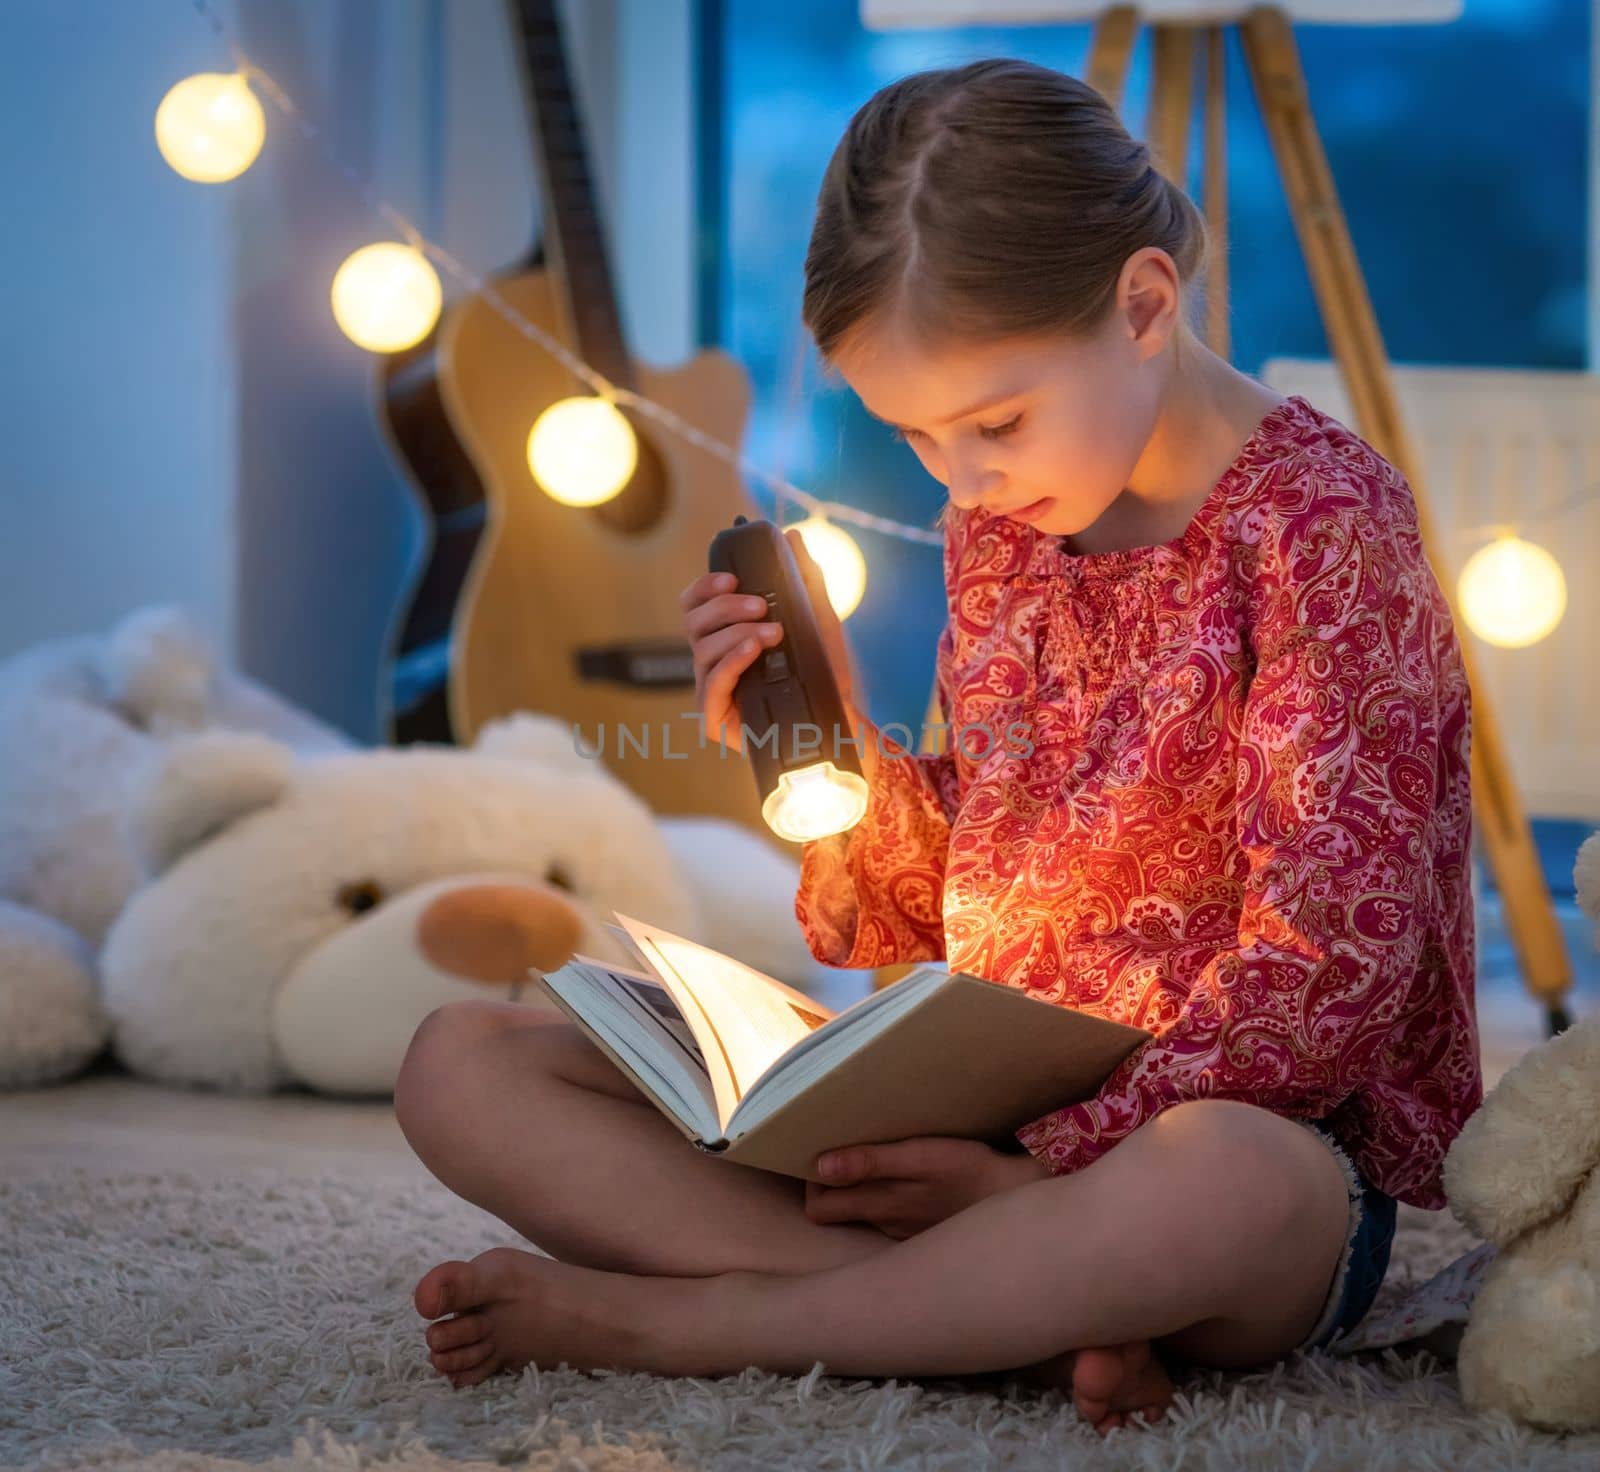 Cute little girl reading book at night by GekaSkr